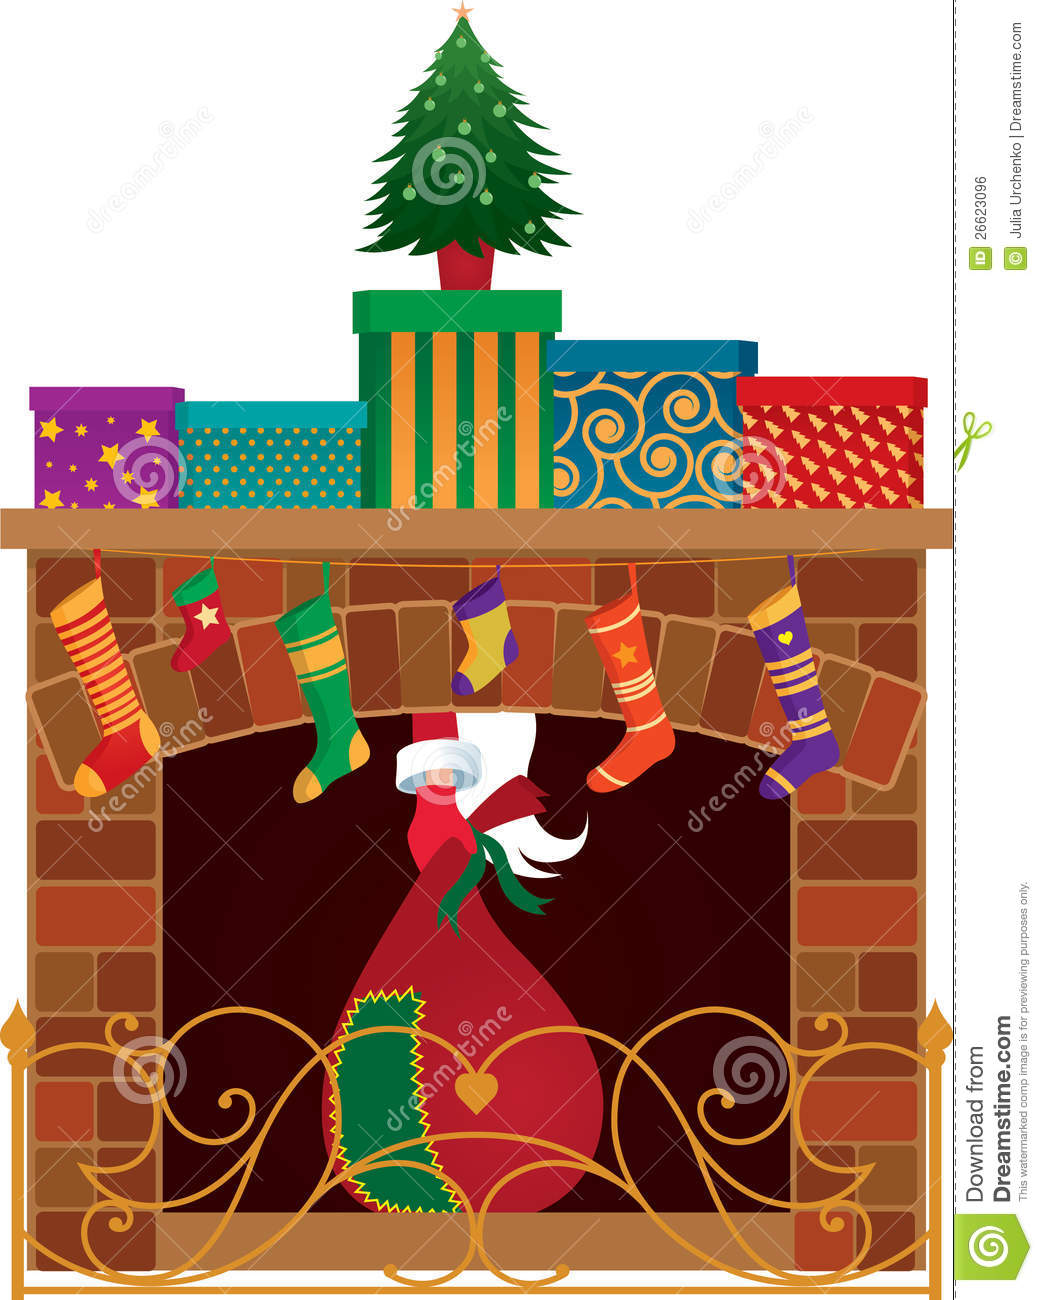 Christmas Fireplace Royalty Free Stock Image   Image  26623096